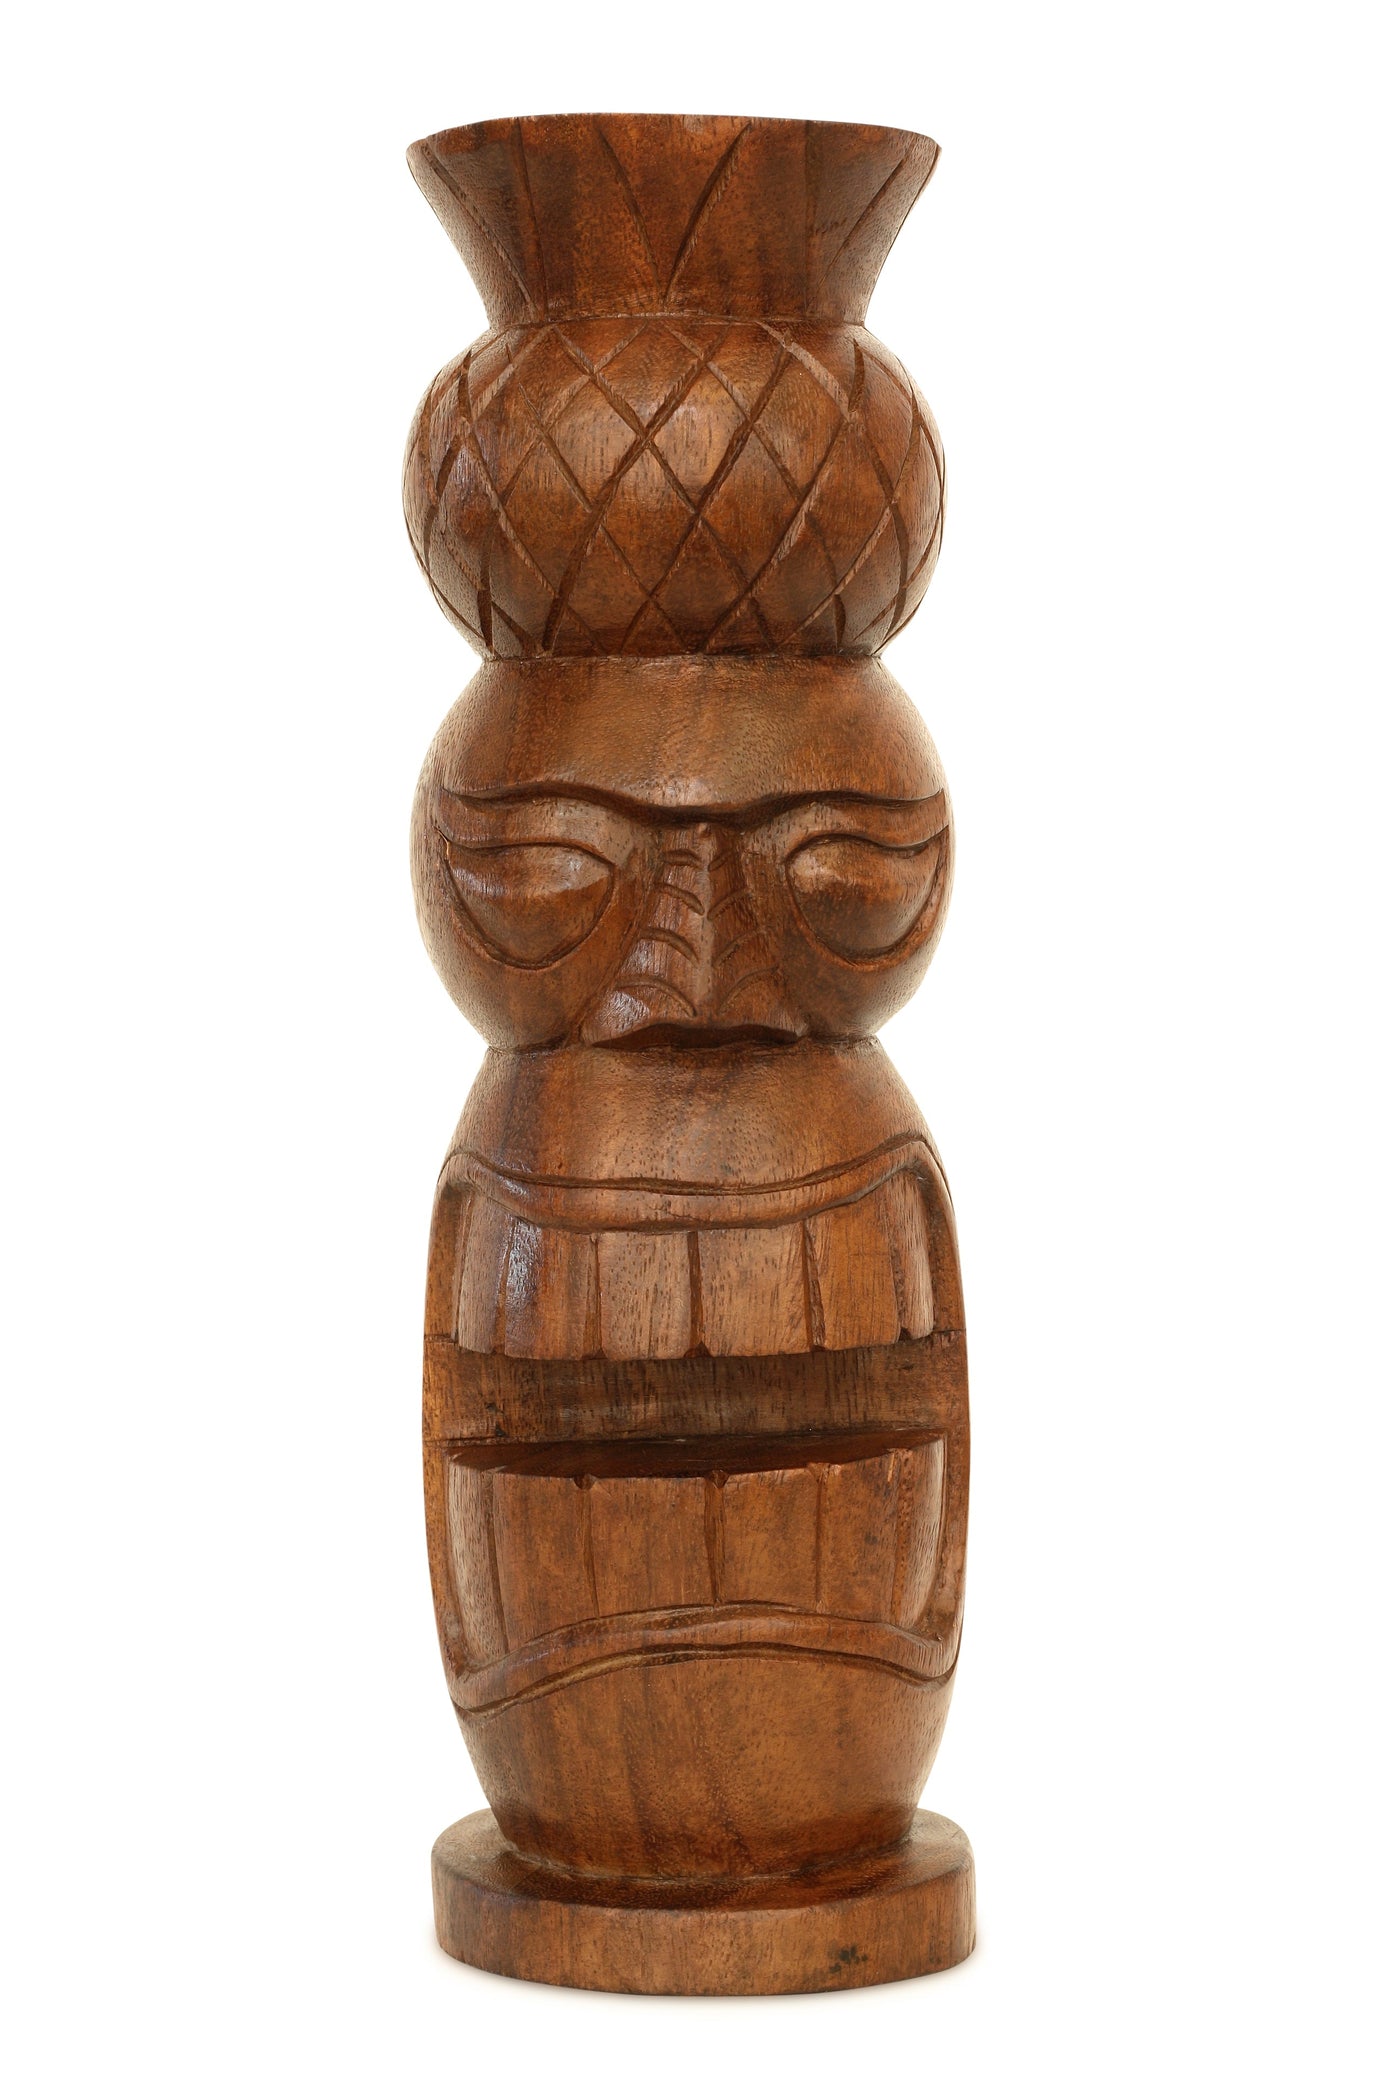 Handmade Wooden Primitive Pineapple Head Tribal Statue Sculpture Tiki Bar Totem Handcrafted Unique Gift Art Decorative Home Decor Accent Figurine Decoration Artwork Hand Carved